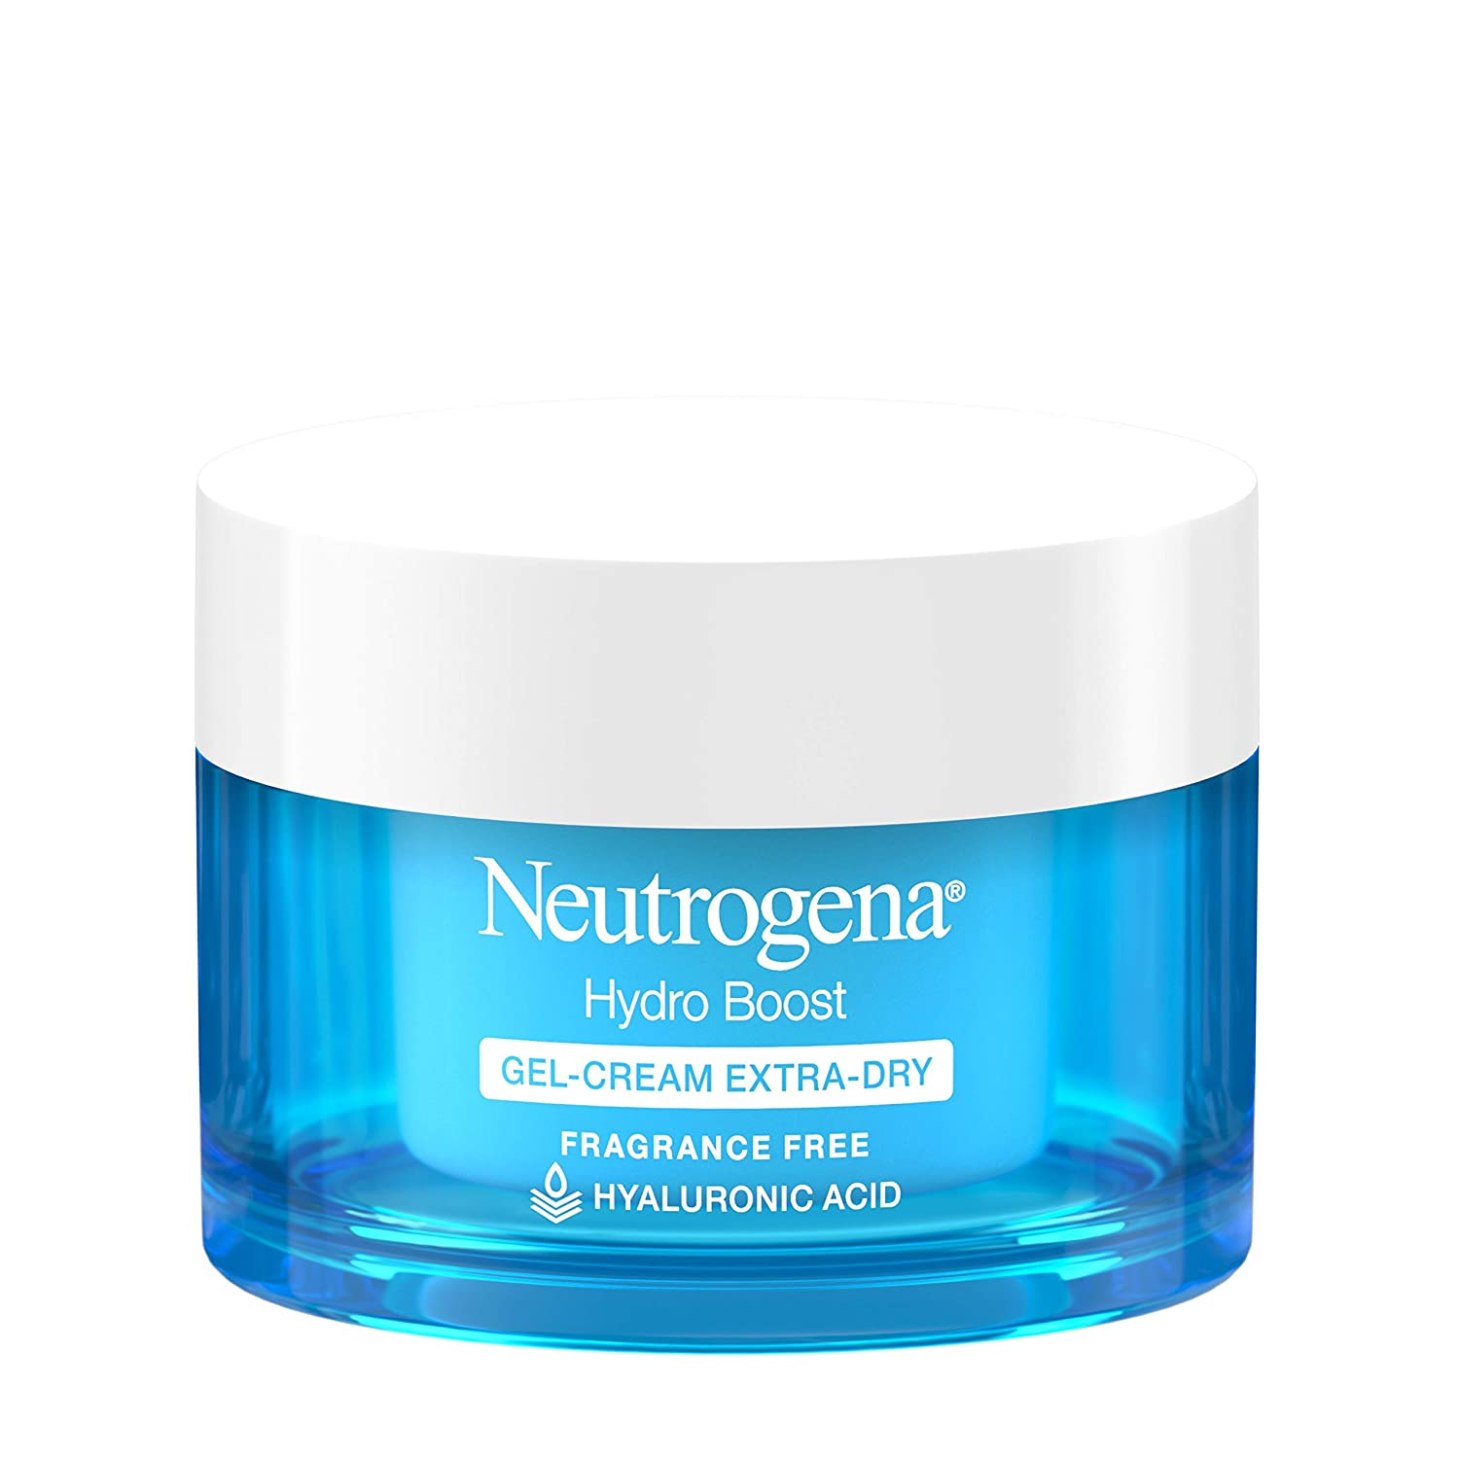 Neutrogena Hydro Boost Gel-Cream Moisturizer